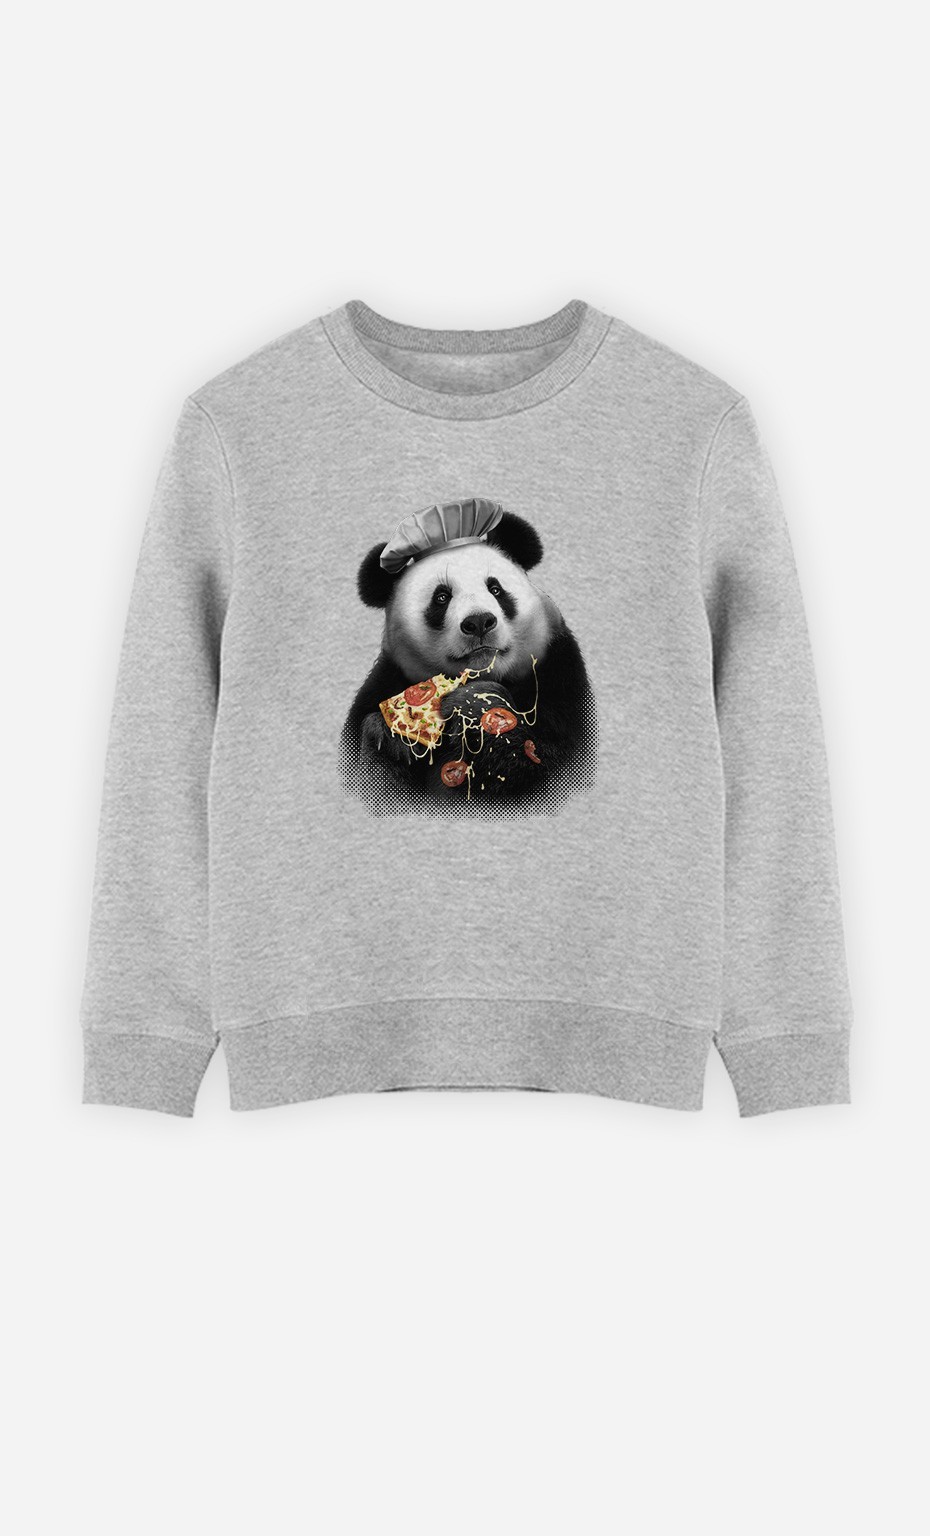 Sweatshirt Panda Pizza